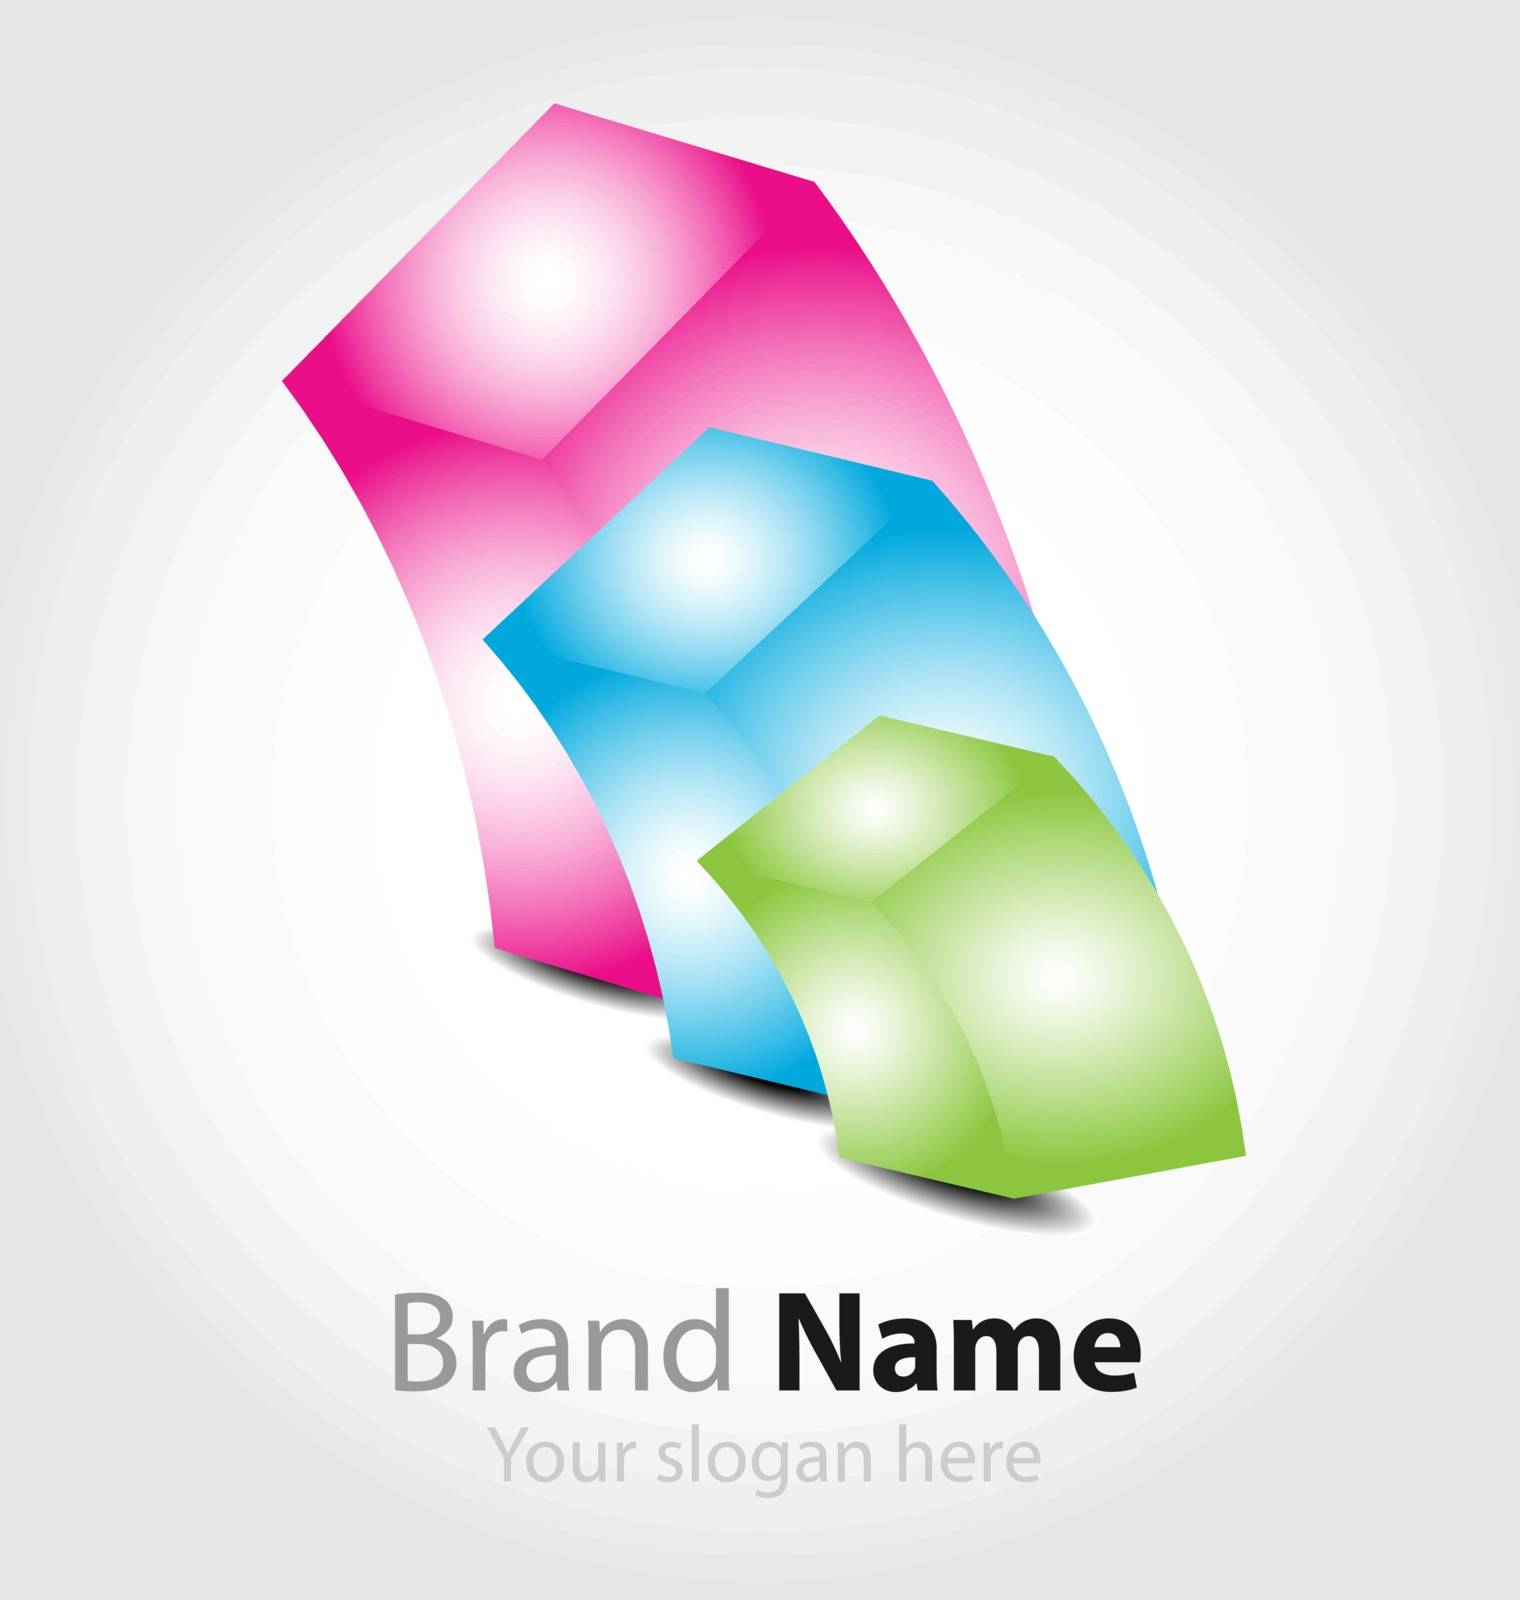 Originally designed vector brand logo in candy color palette